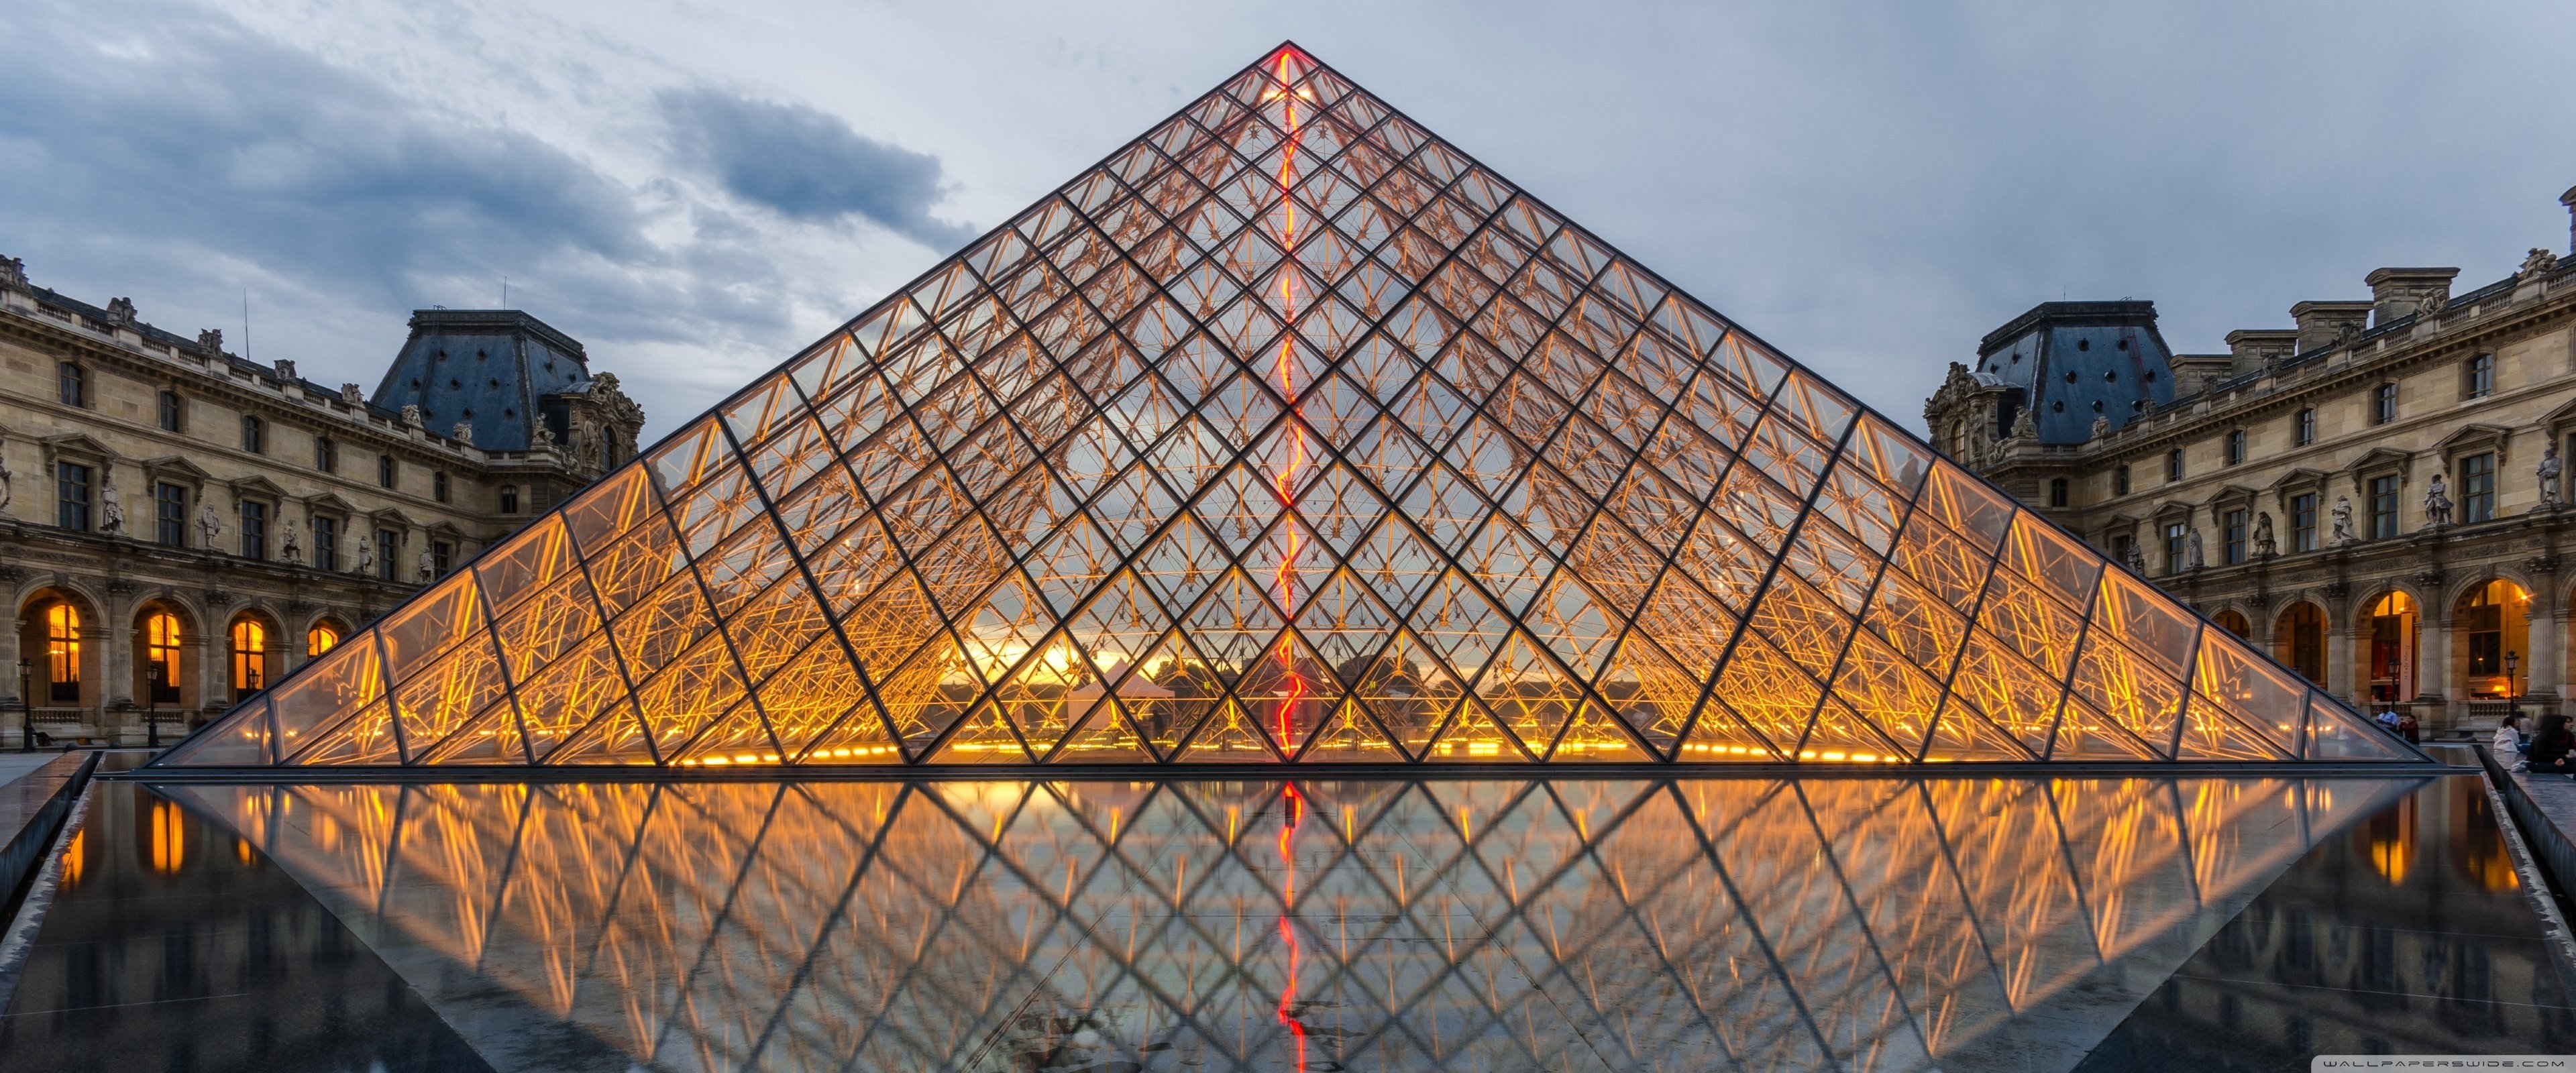 Pyramid of the Louvre Paris France Europe 4K HD Desktop